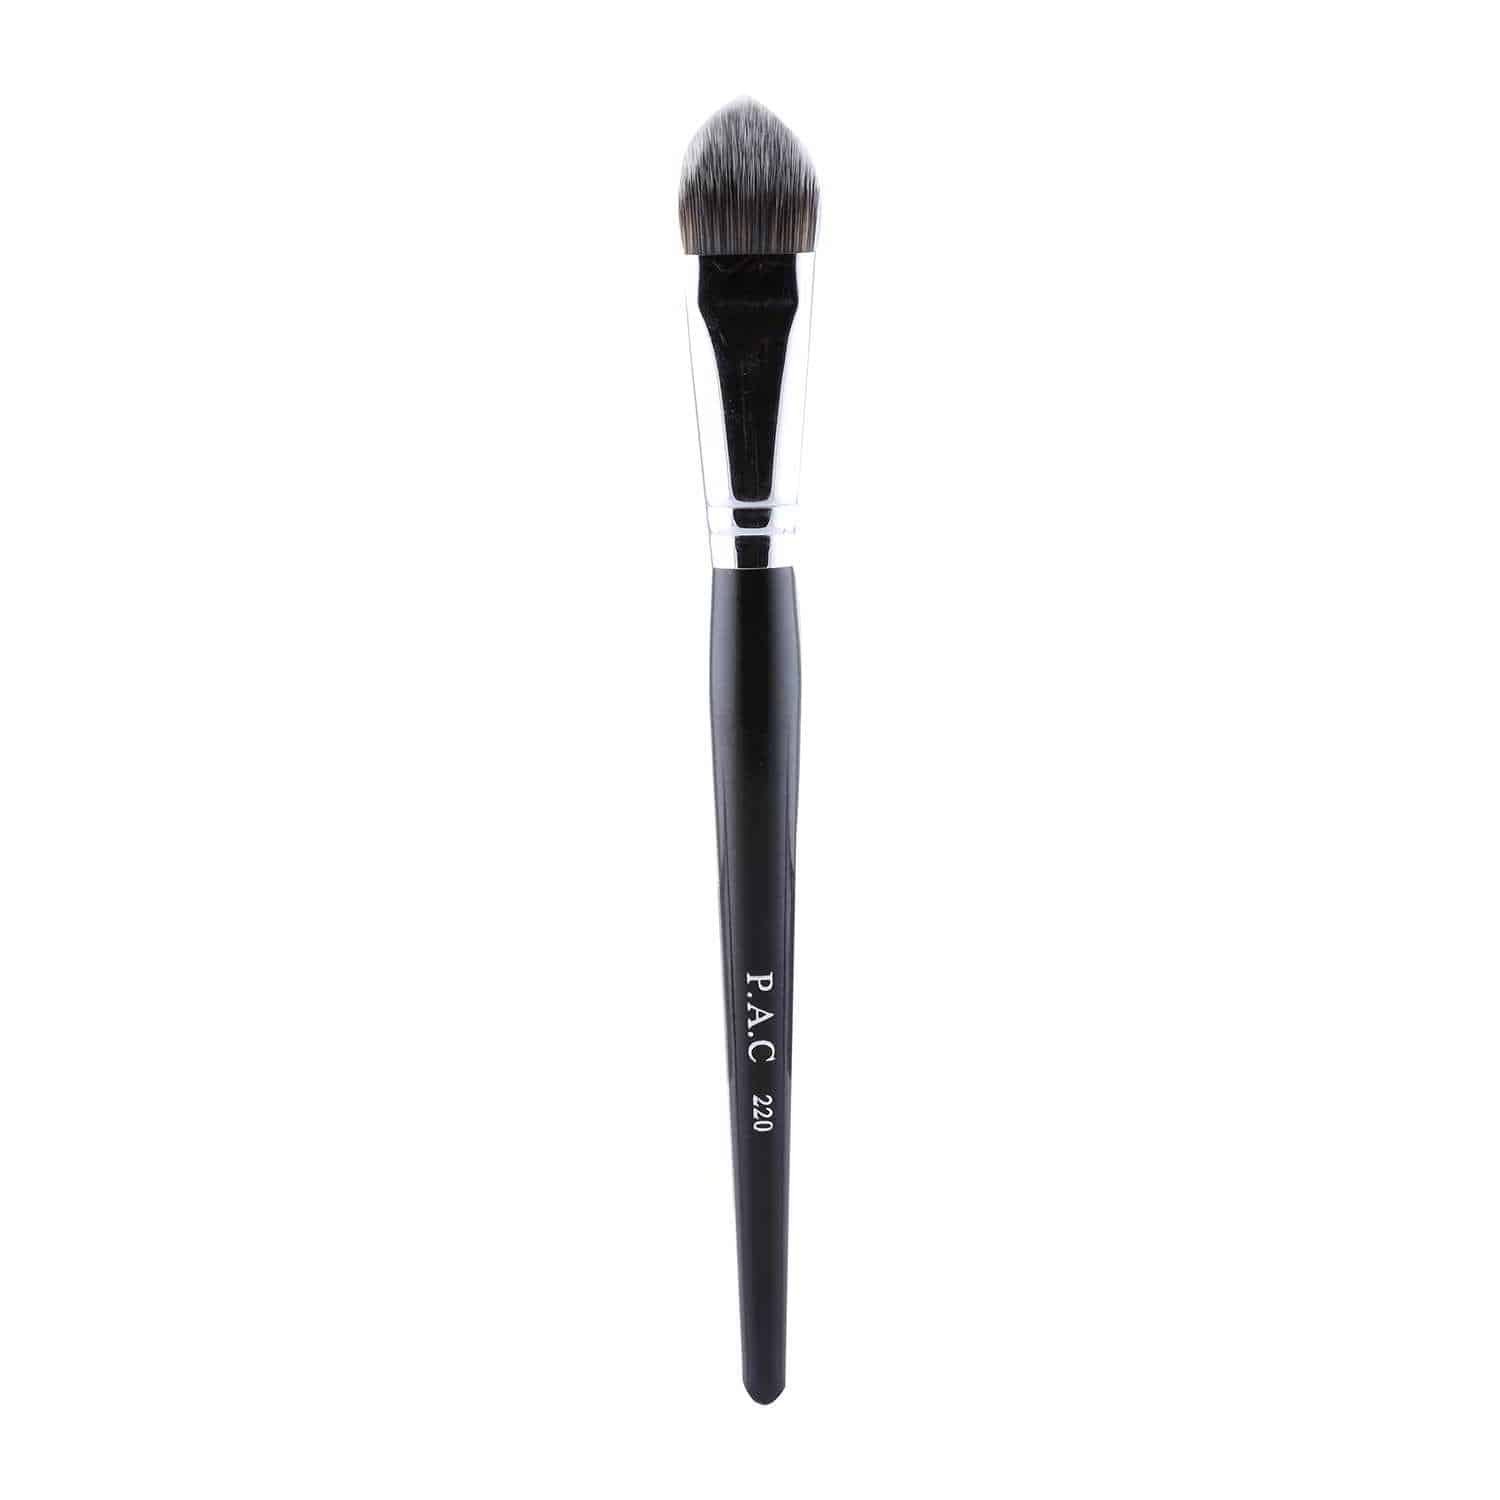 PAC Cosmetics Angle Flat Foundation Brush No. 220 (Source: paccosmetics.com)